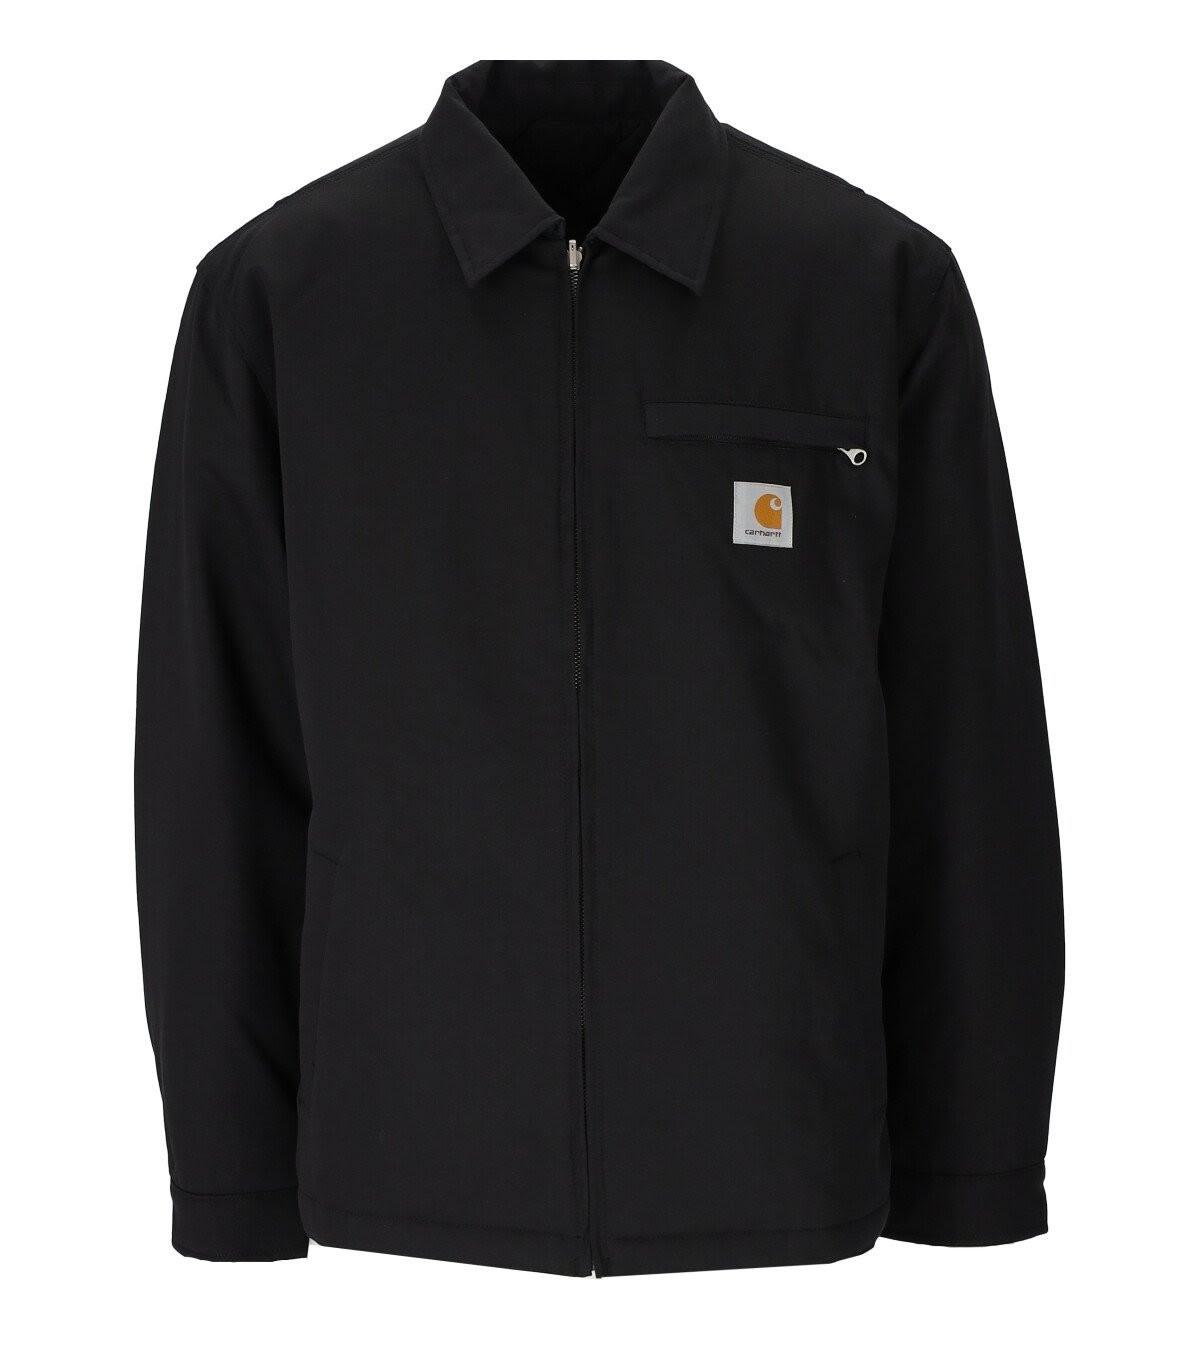 Carhartt Wip Madera Black Reversible Jacket